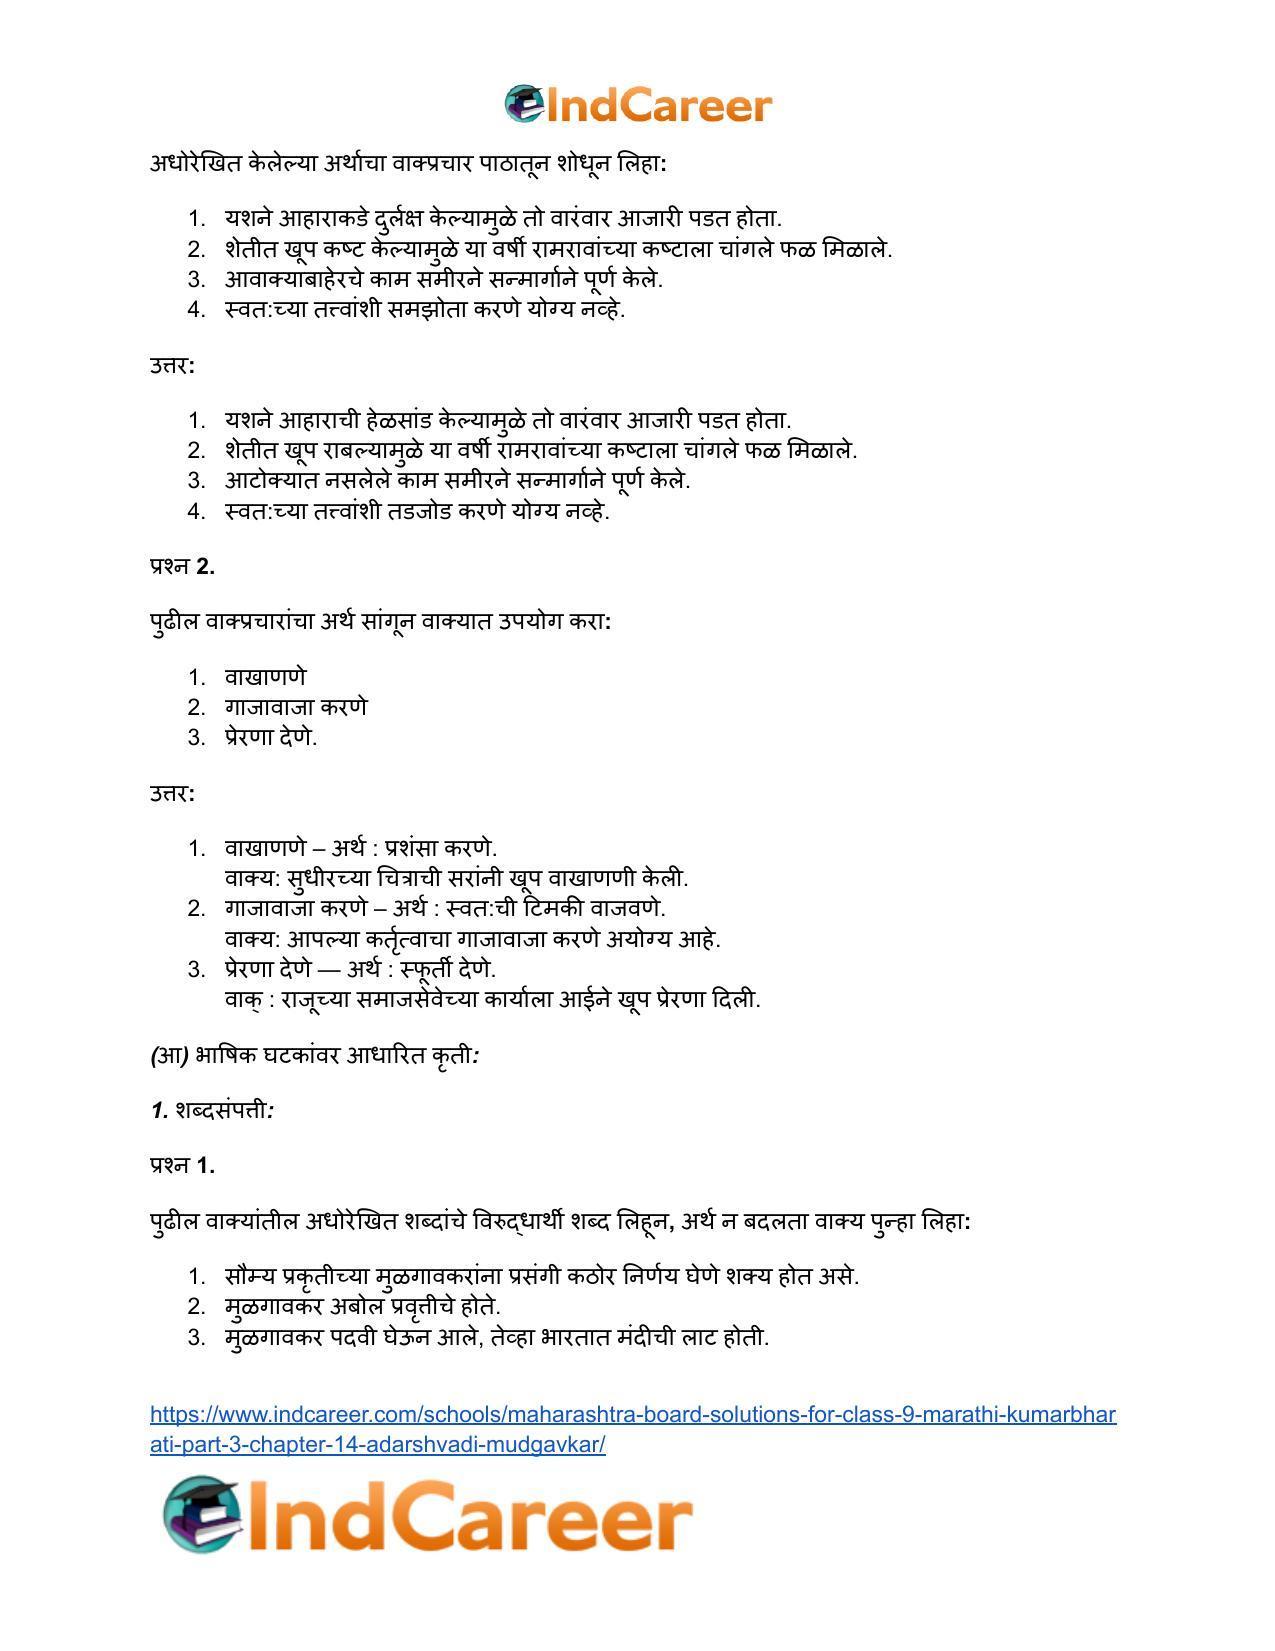 Maharashtra Board Solutions for Class 9- Marathi Kumarbharati (Part- 3): Chapter 14- आदर्शवादी मुळगावकर - Page 19